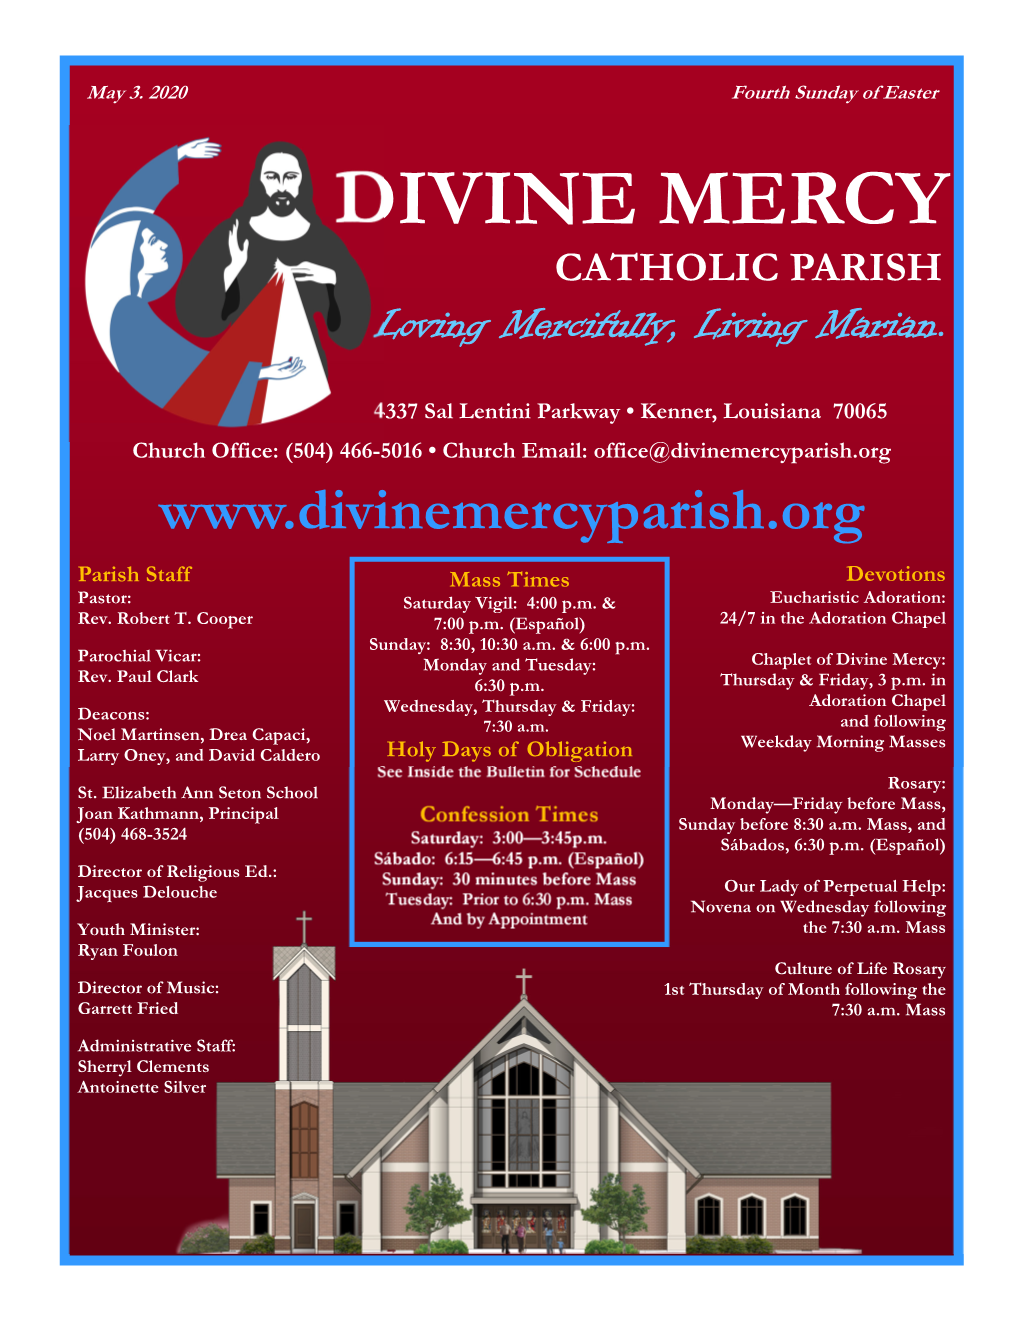 DIVINE MERCY CATHOLIC PARISH Loving Mercifully, Living Marian